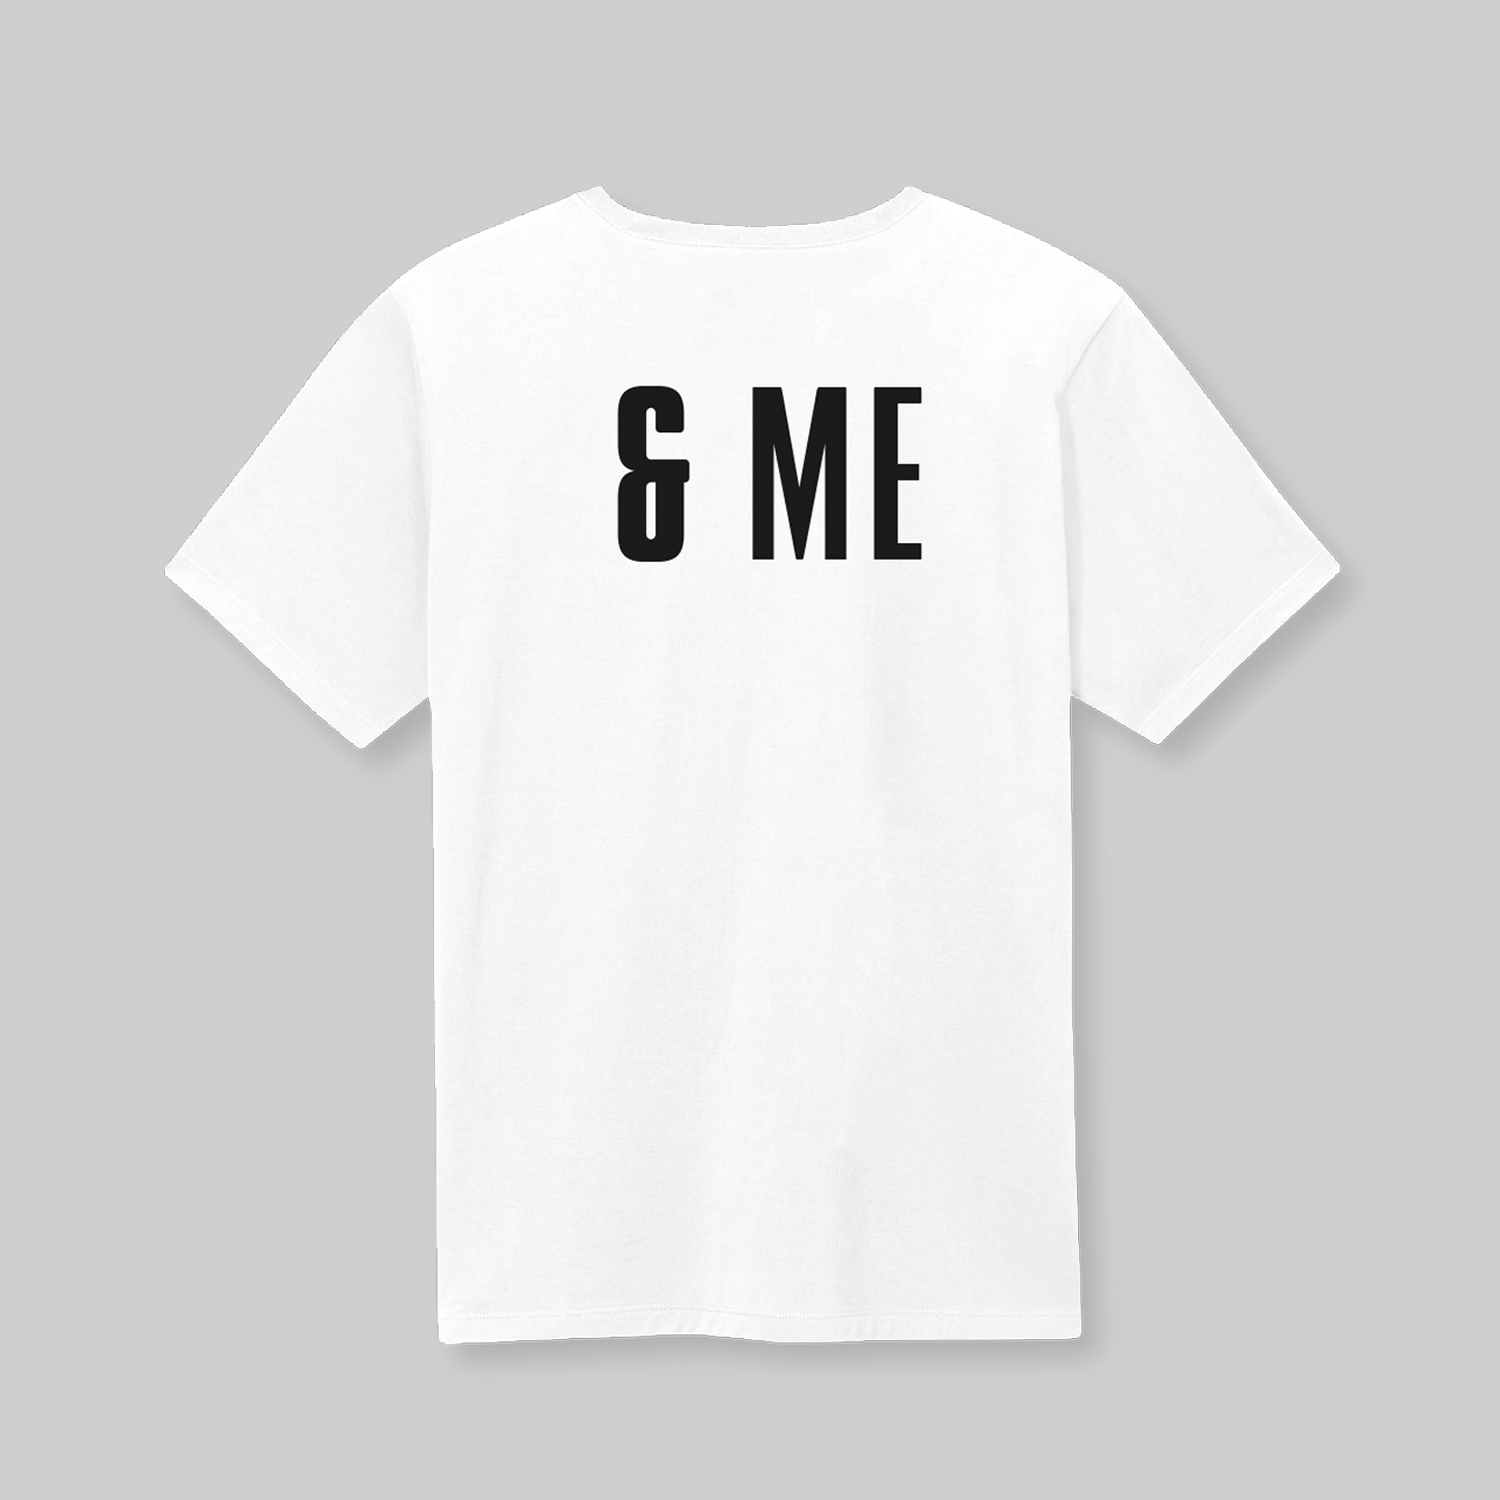 You & Me: T-Shirt